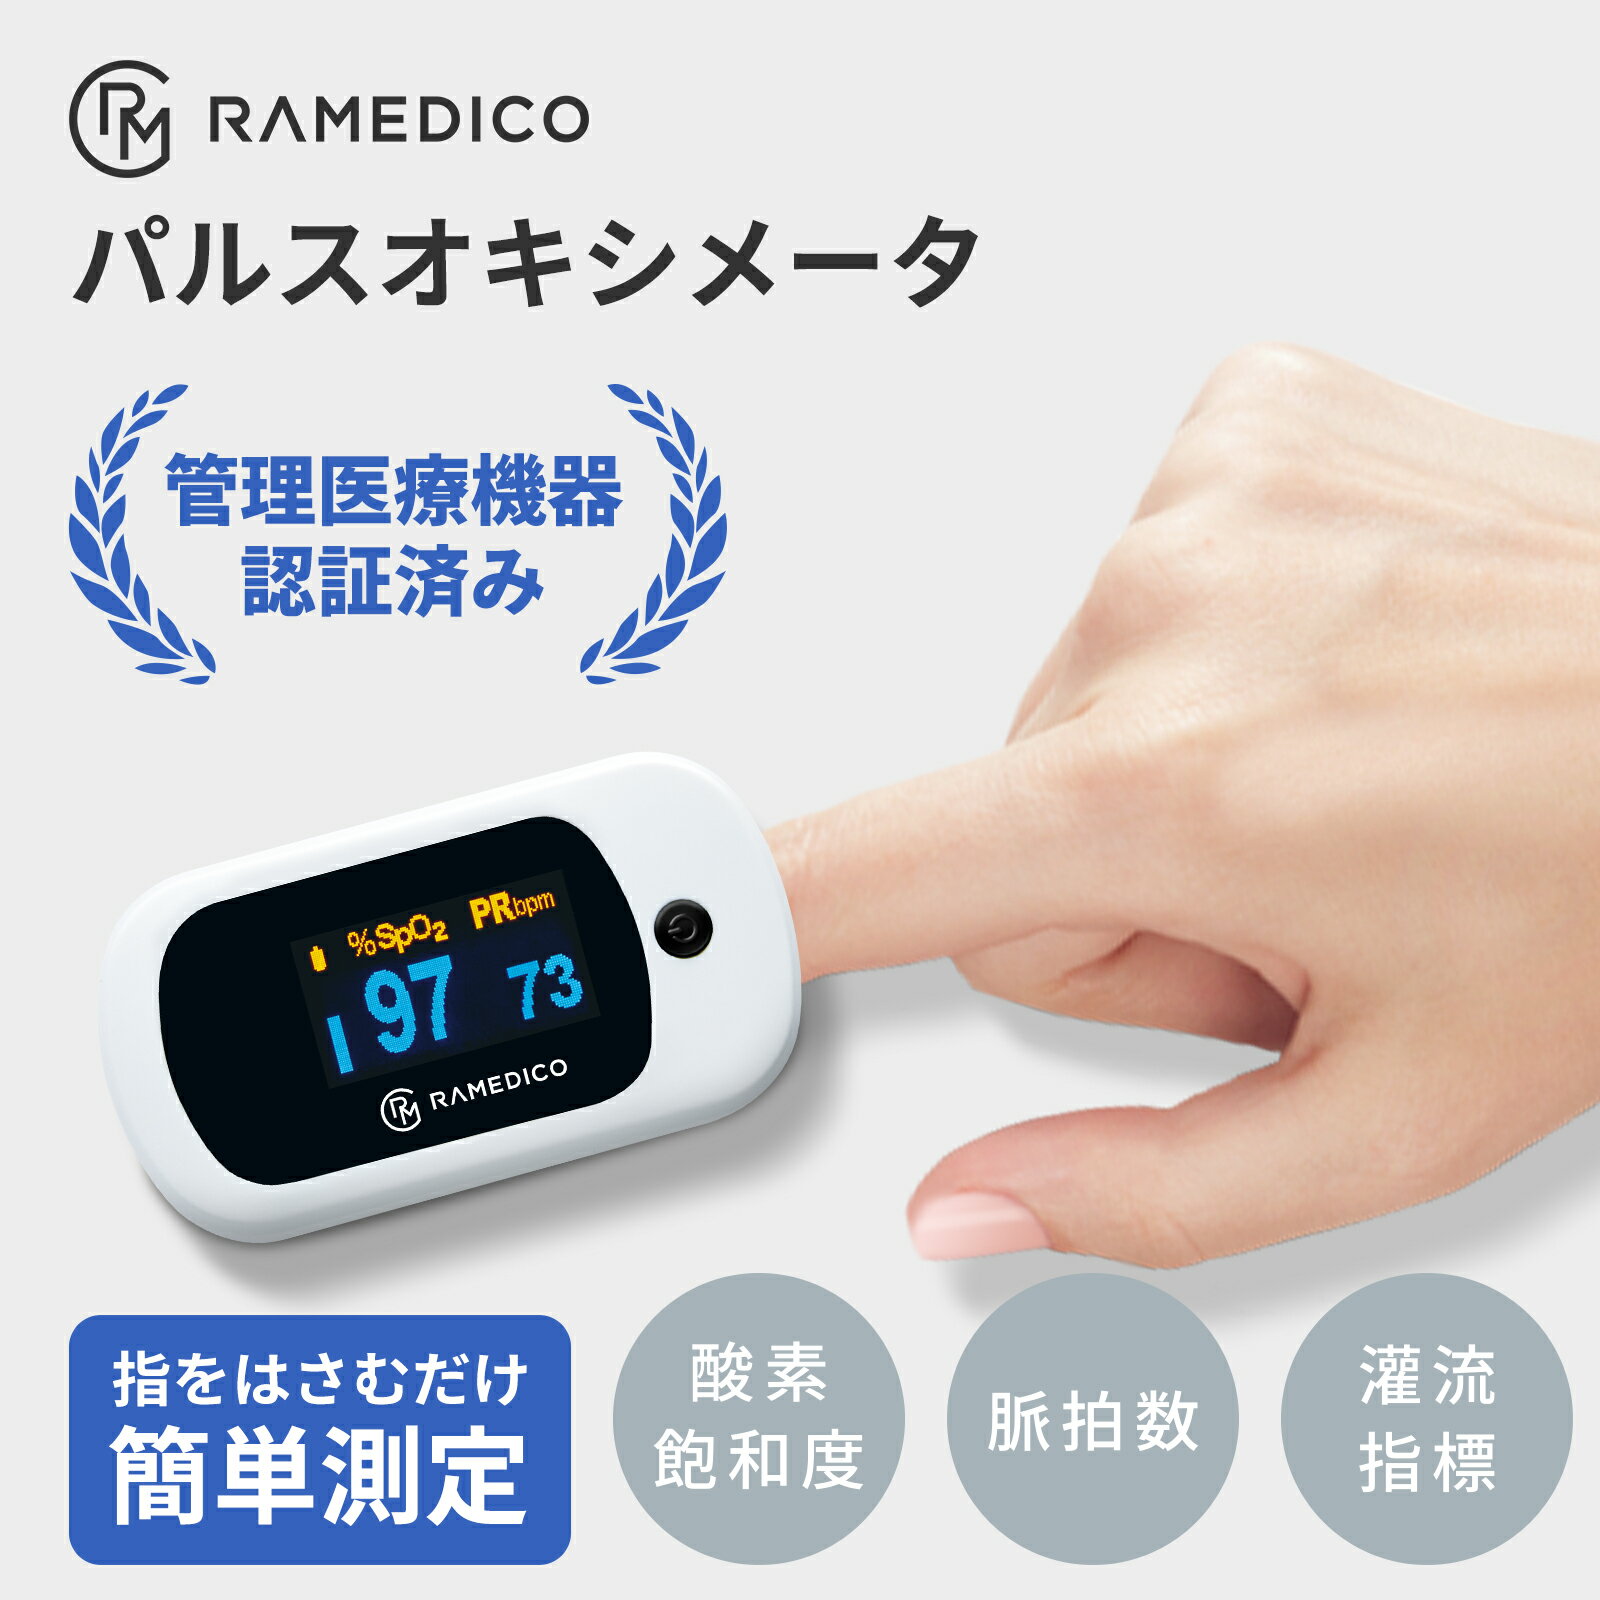 RAMEDICO パルスオキシメータ KA200 1台 KAEI 医療機器認証 血中酸素濃度計